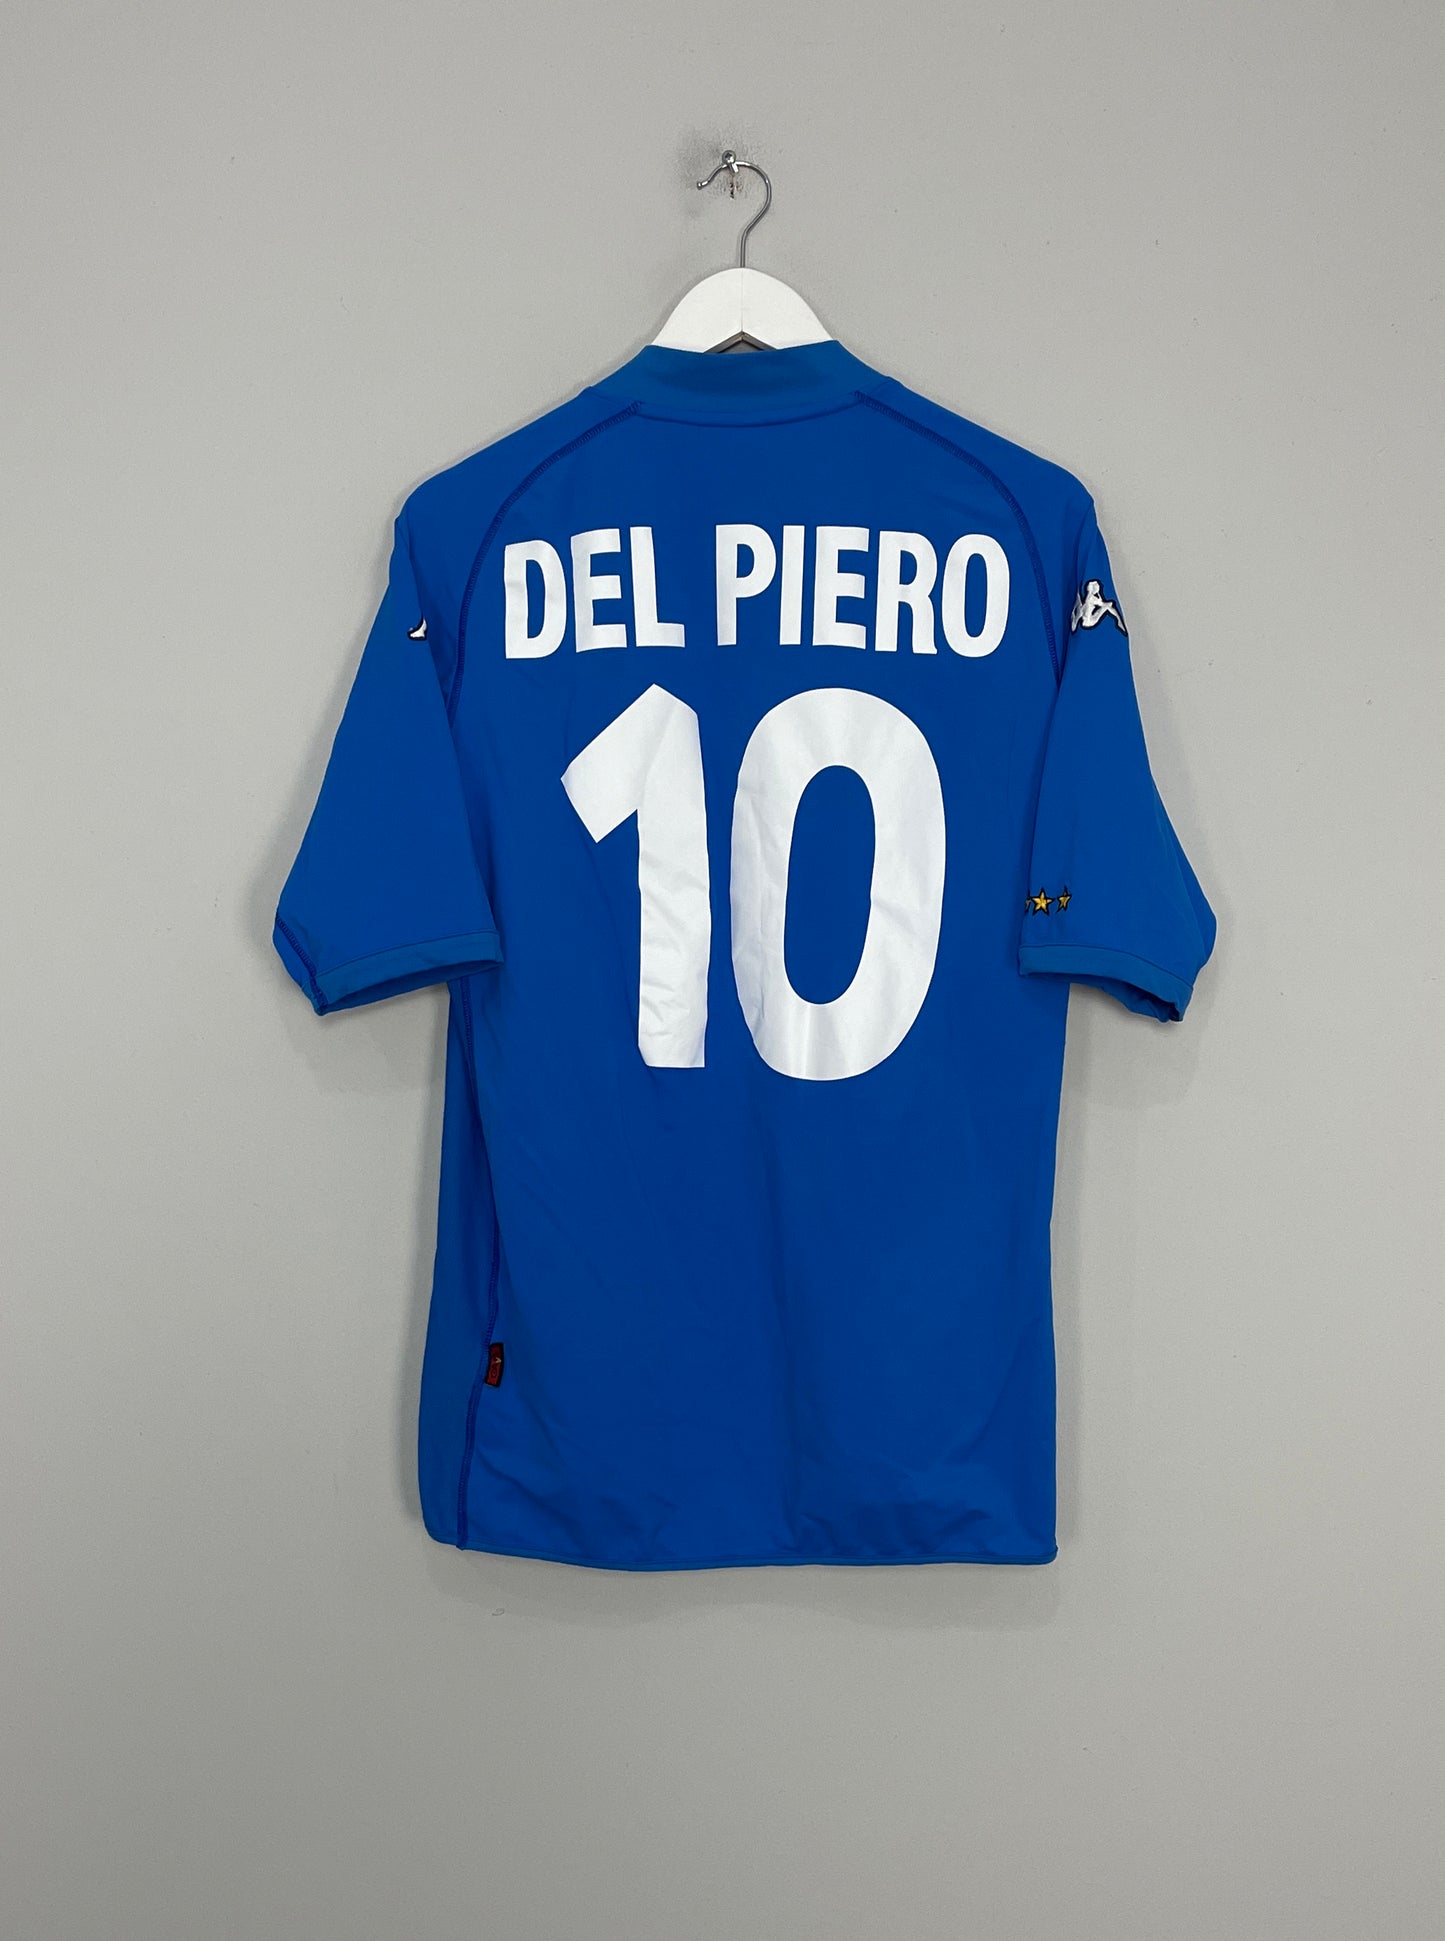 Image of the Italy Del Piero shirt from the 2000/02 season